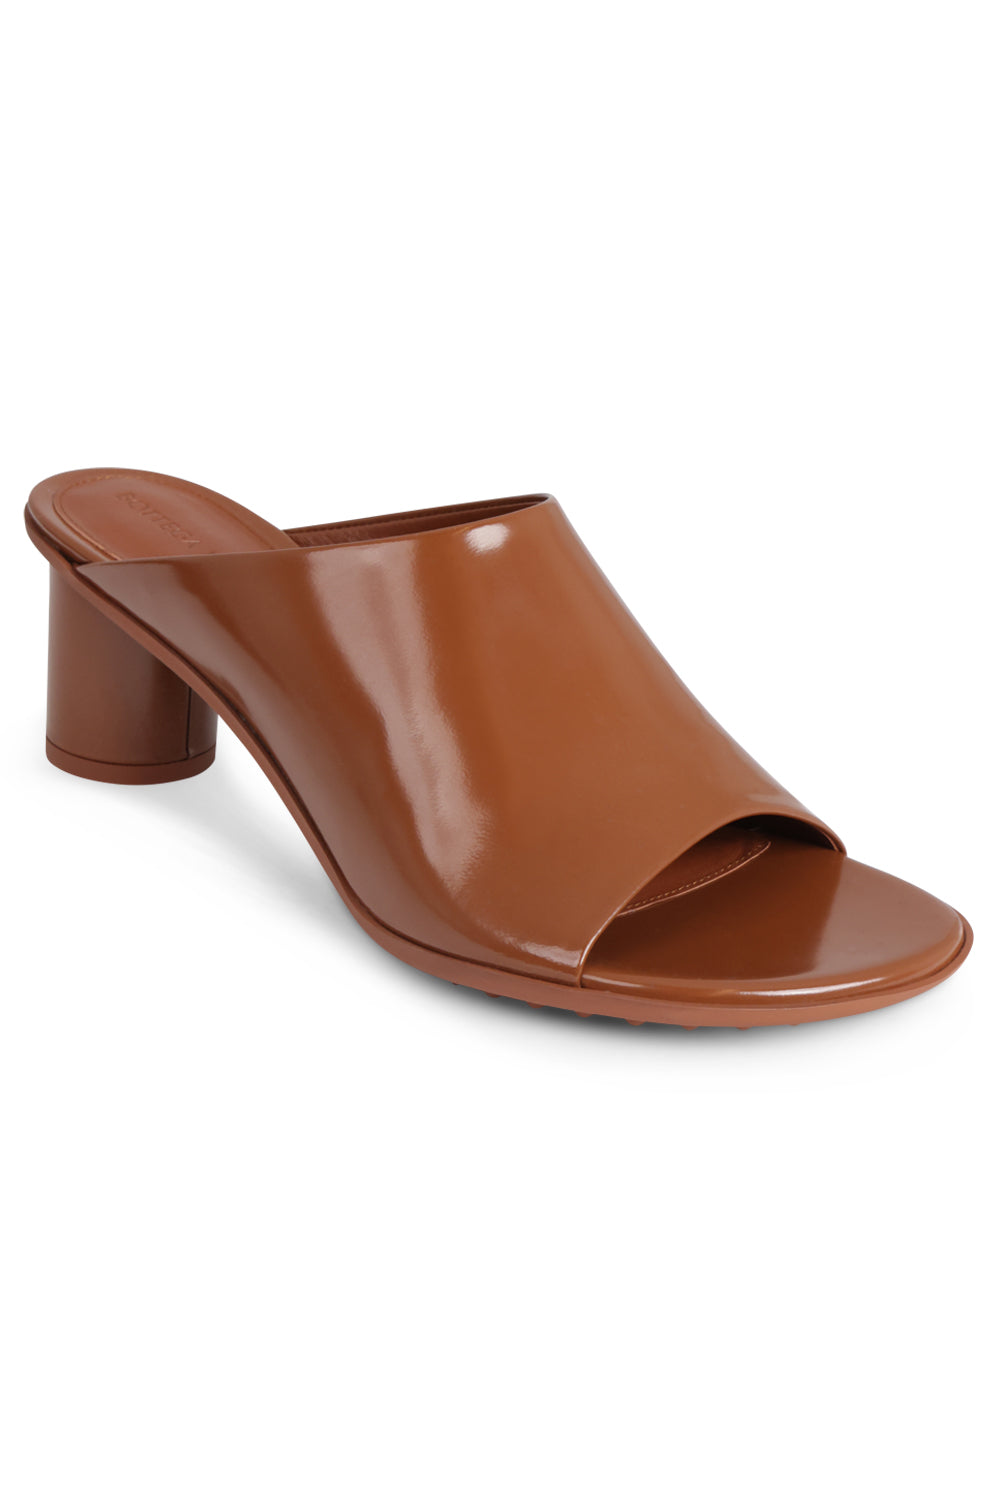 KACEY Black Block Heel Mules | Women's Designer Heels – Steve Madden Canada